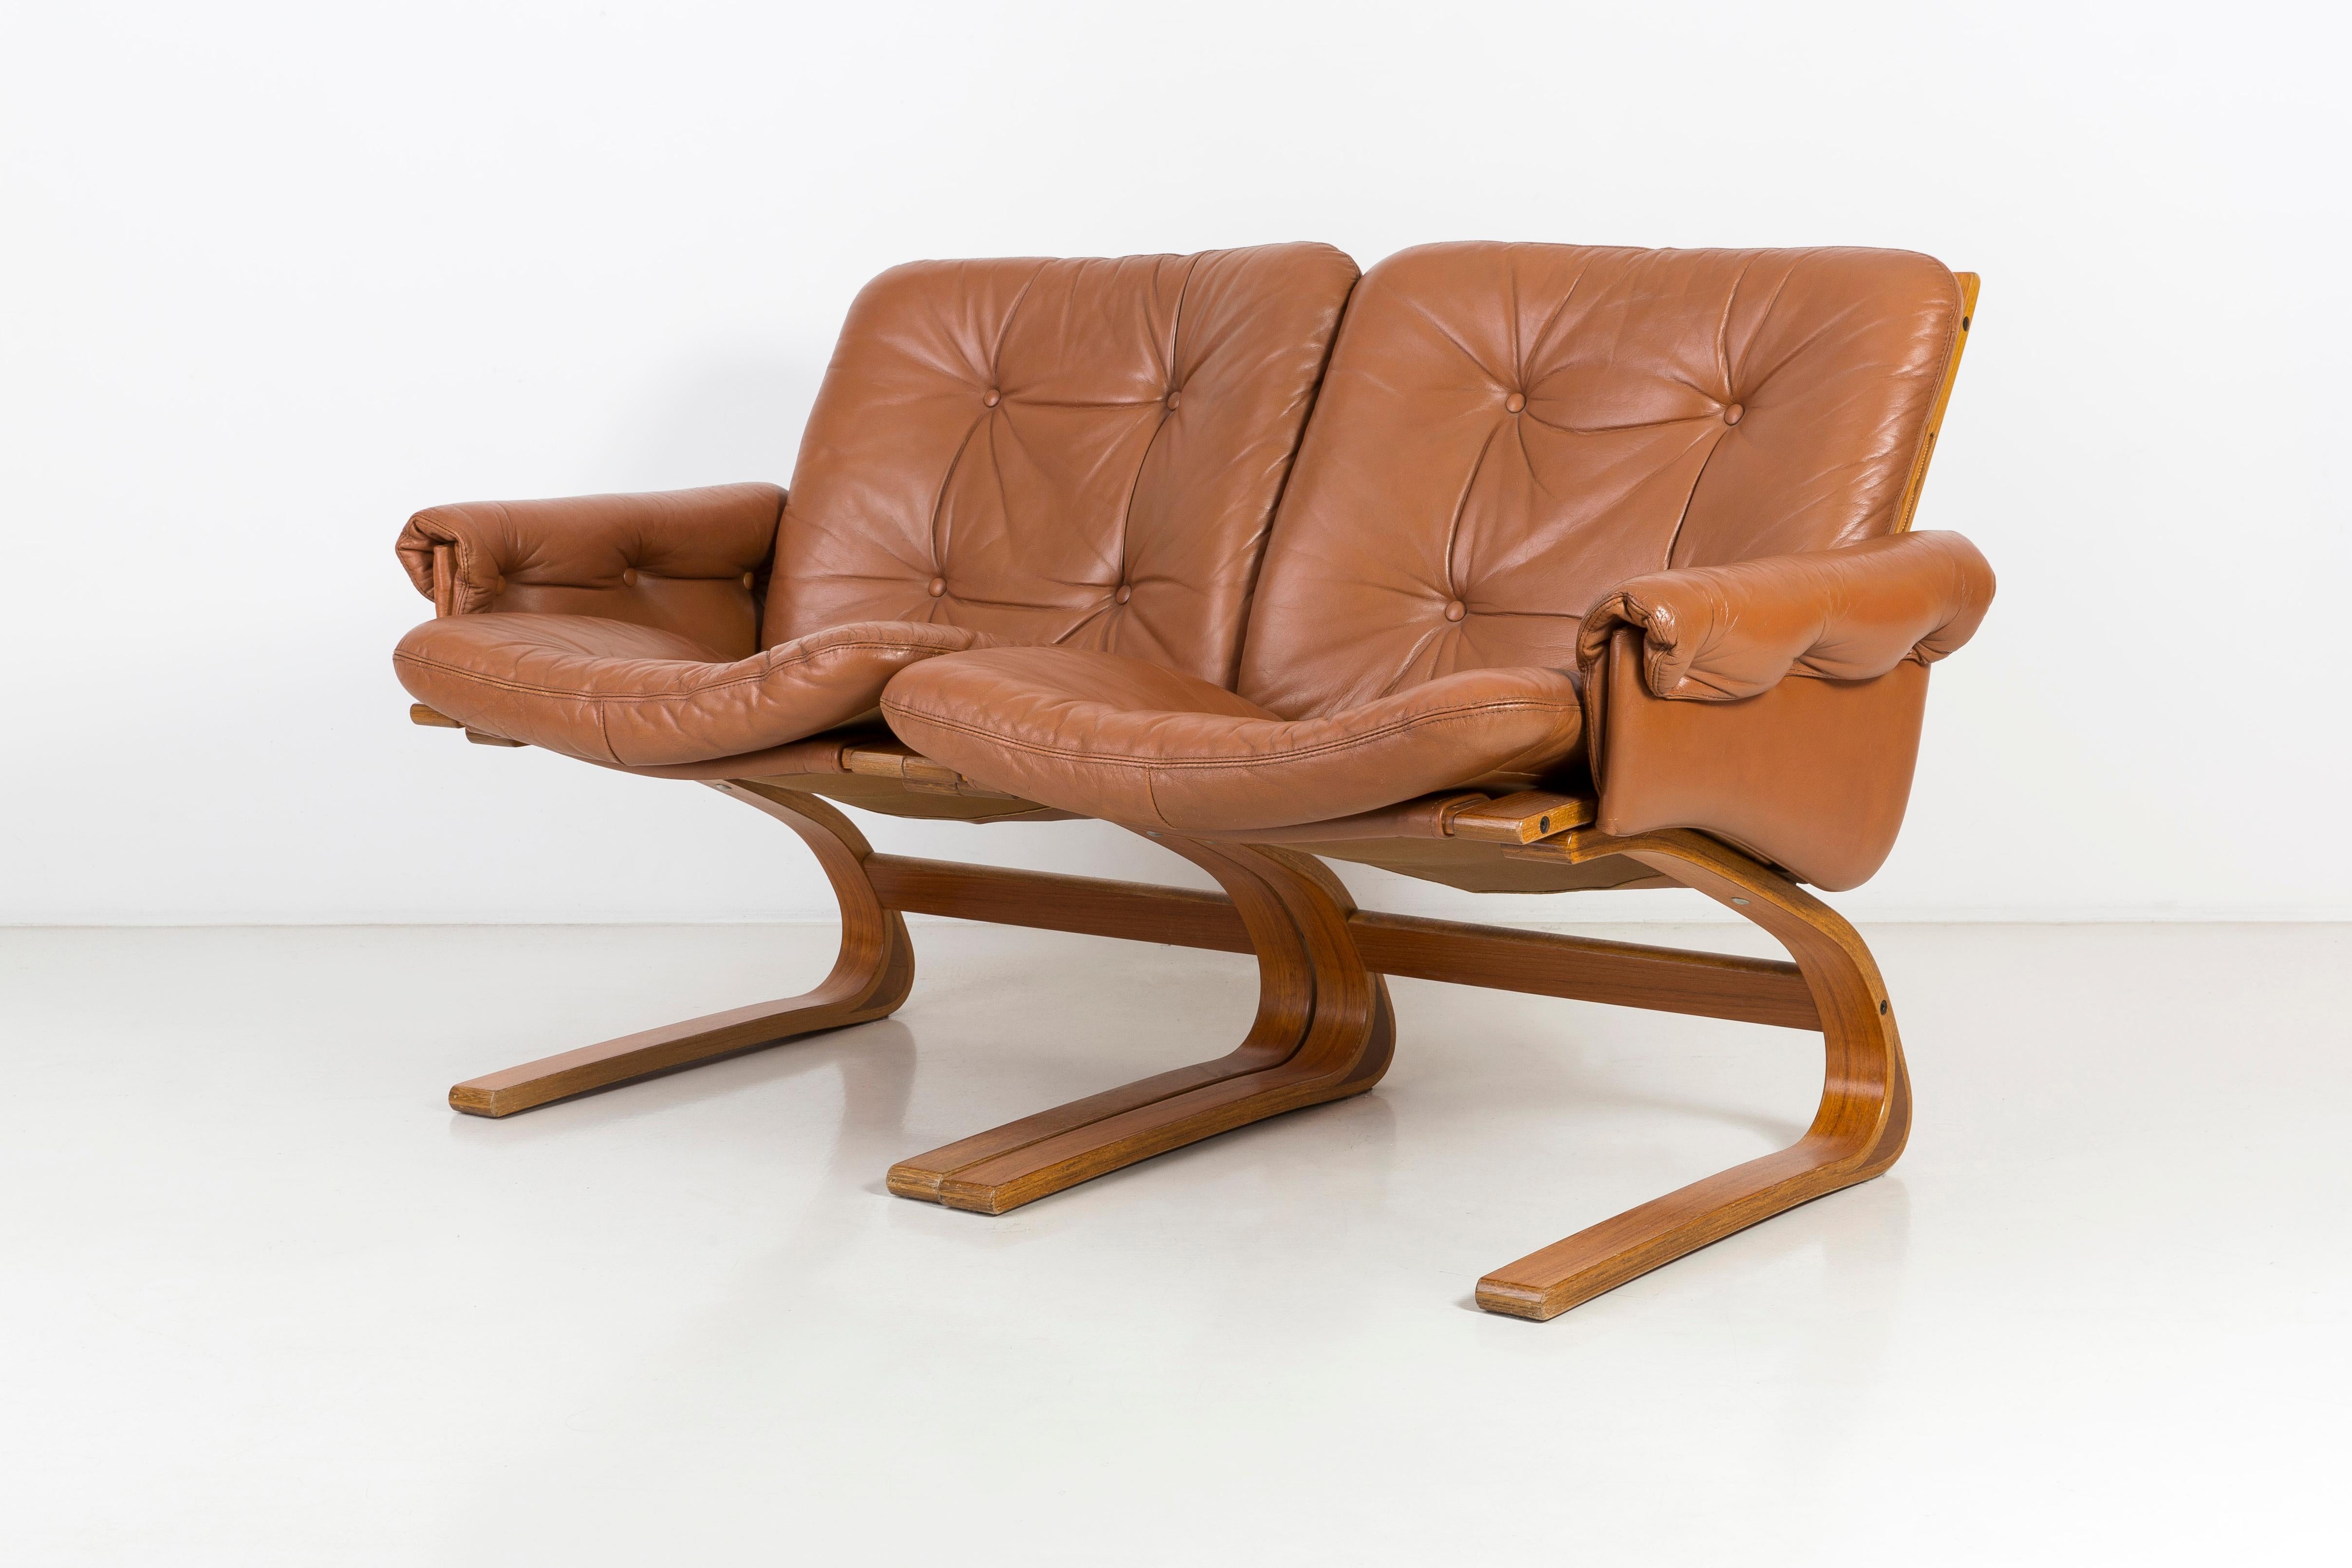 Hand-Painted 20th Century Teak Wood Kengu Sofa, Elsa & Nordahl Solheim for Rybo Rykken, 1970s For Sale